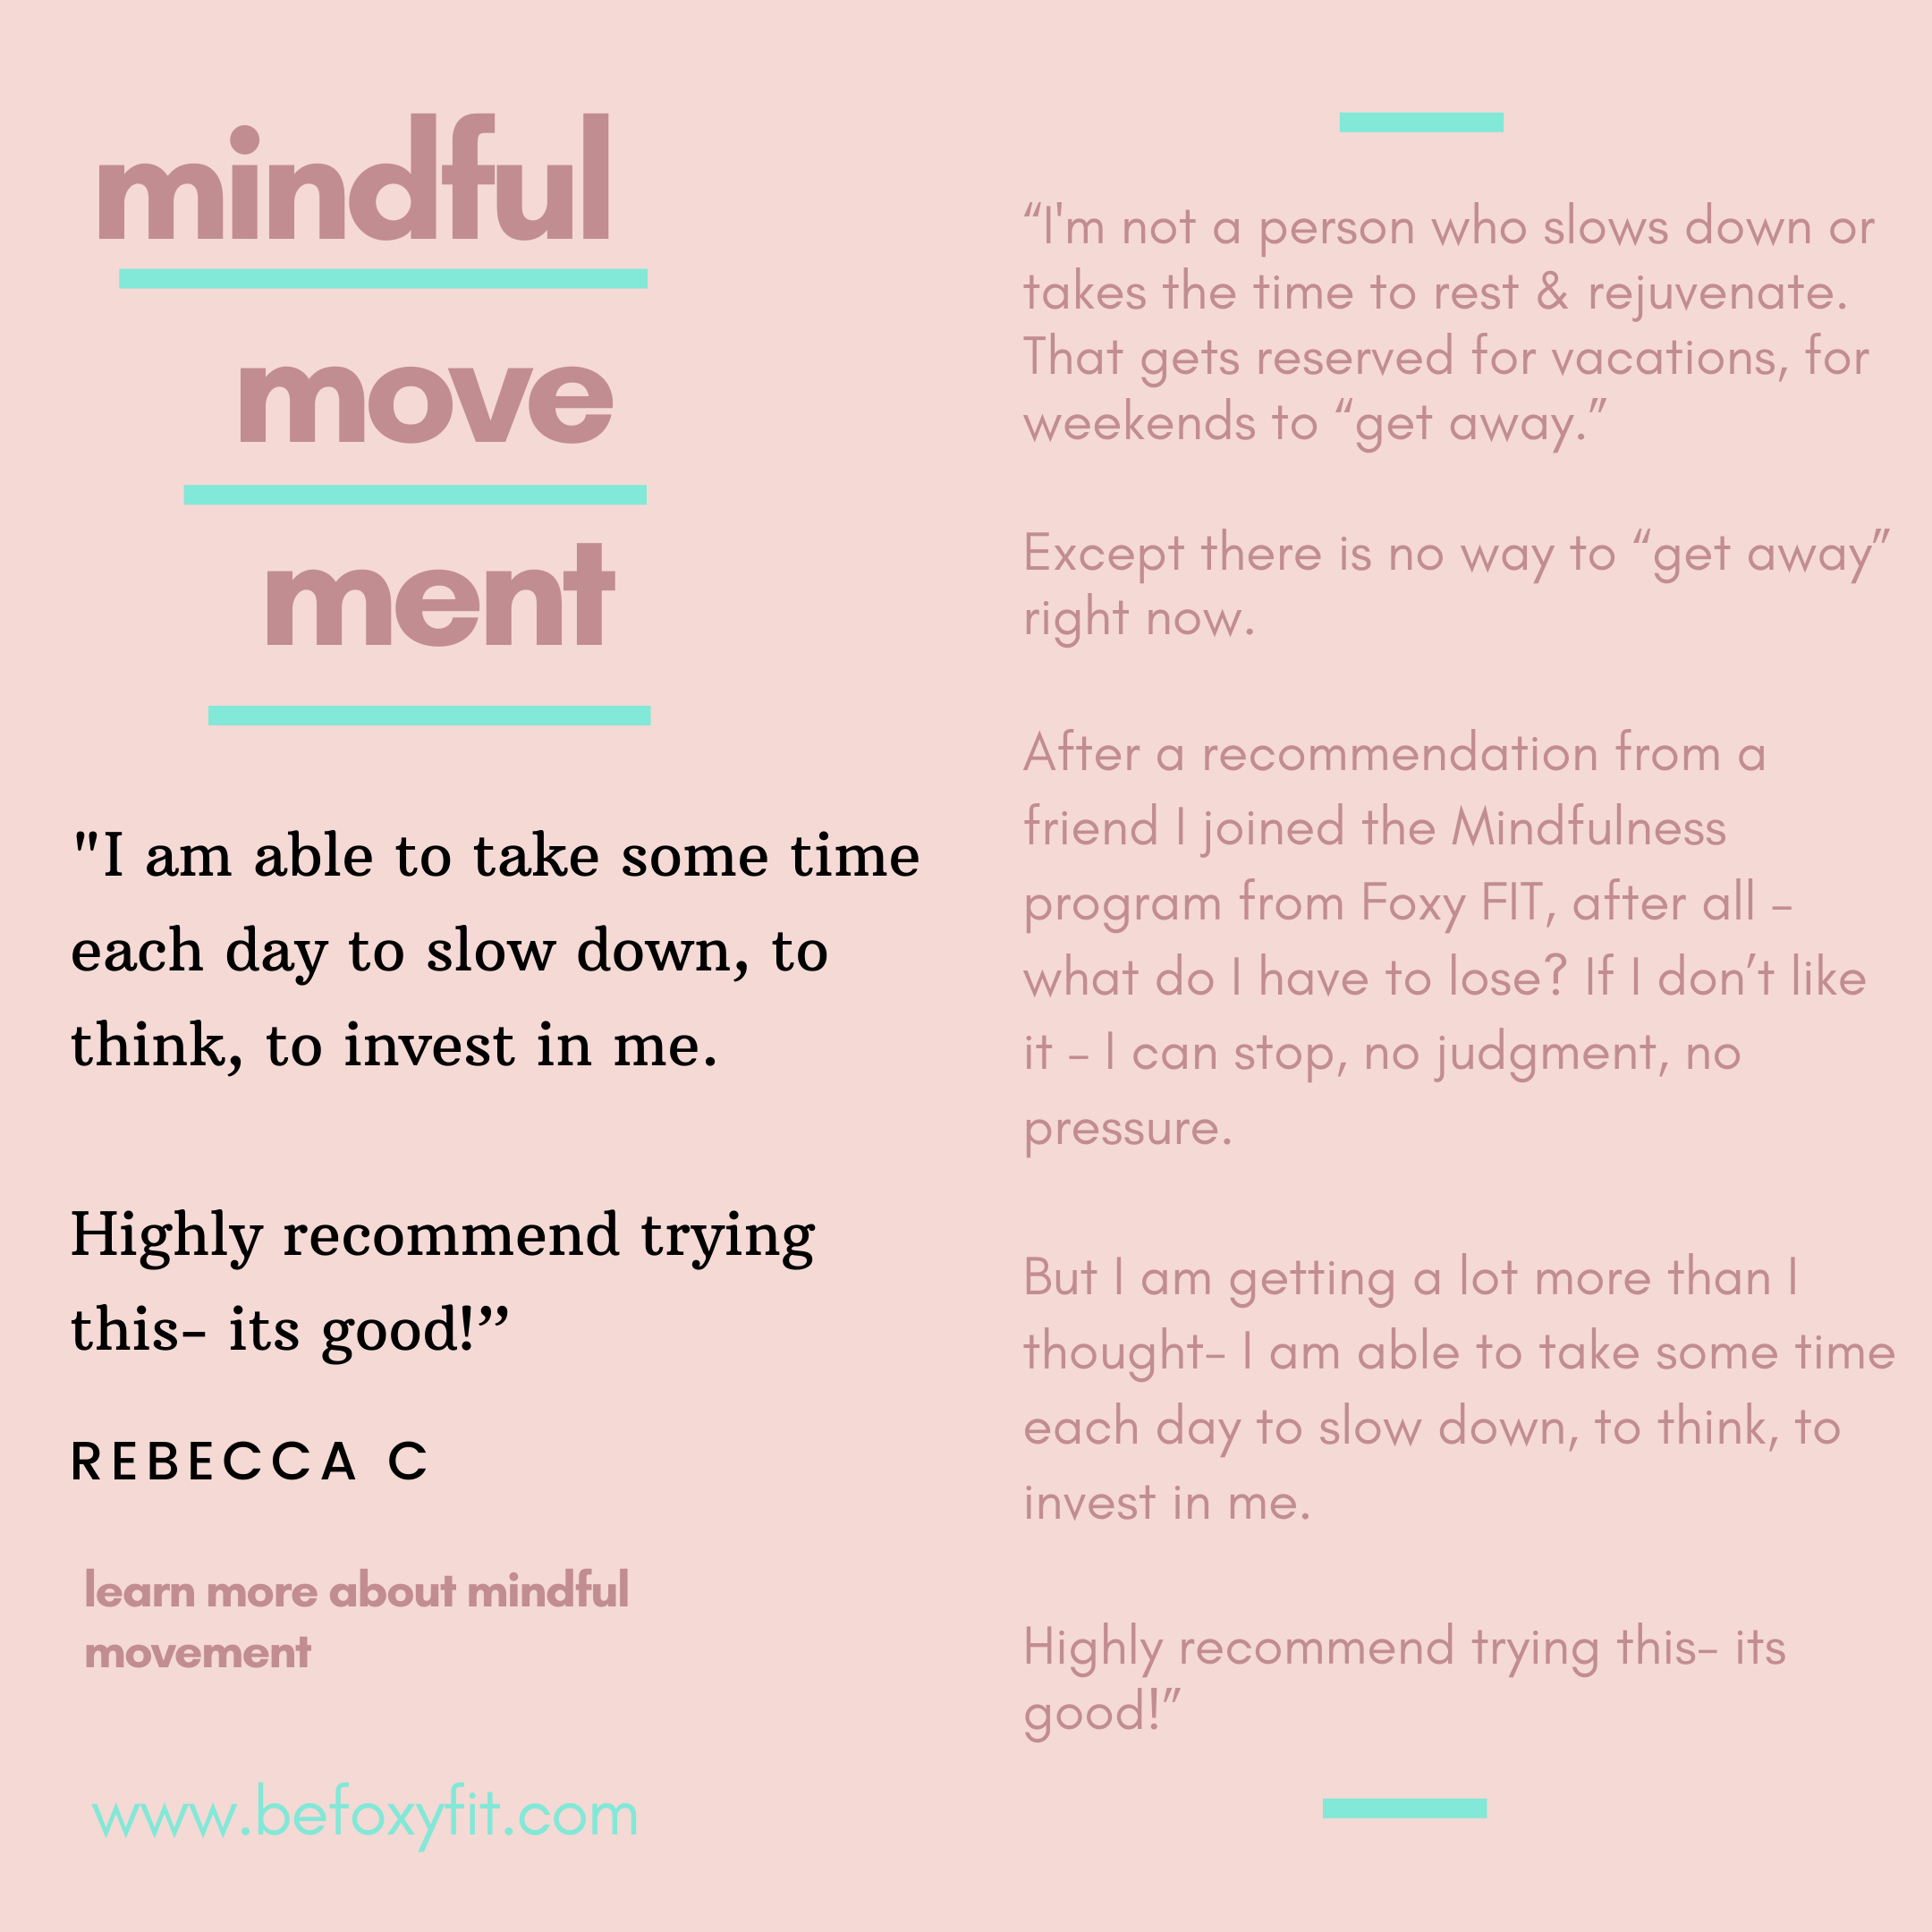 Rebecca mindful move ment.png